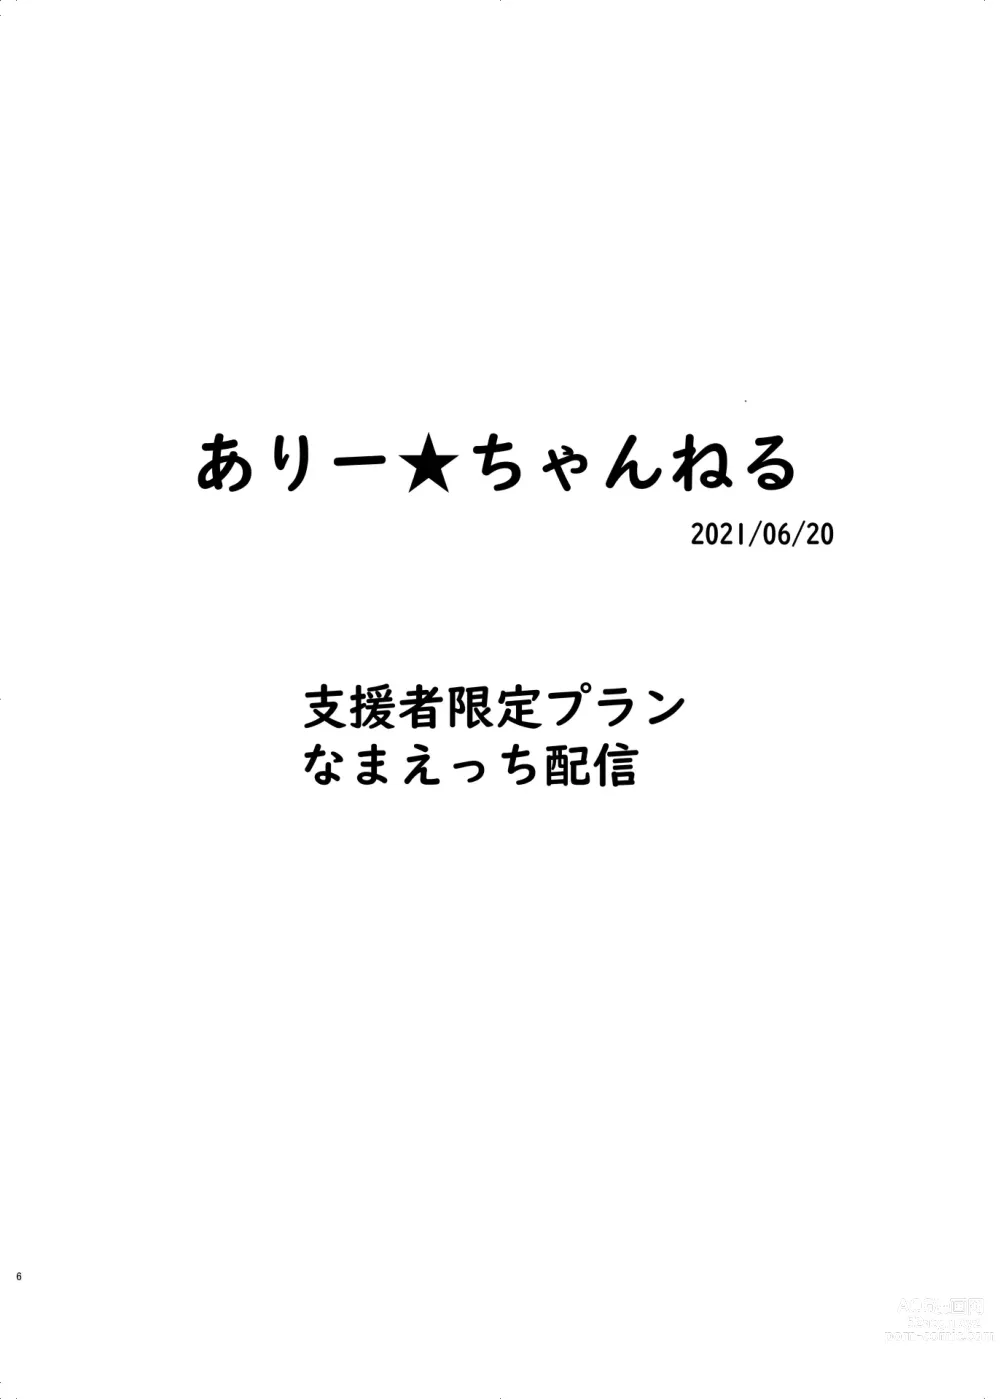 Page 6 of doujinshi Ari Channel 20210620 Shiensha Gentei Plan Nama Ecchi Haishin